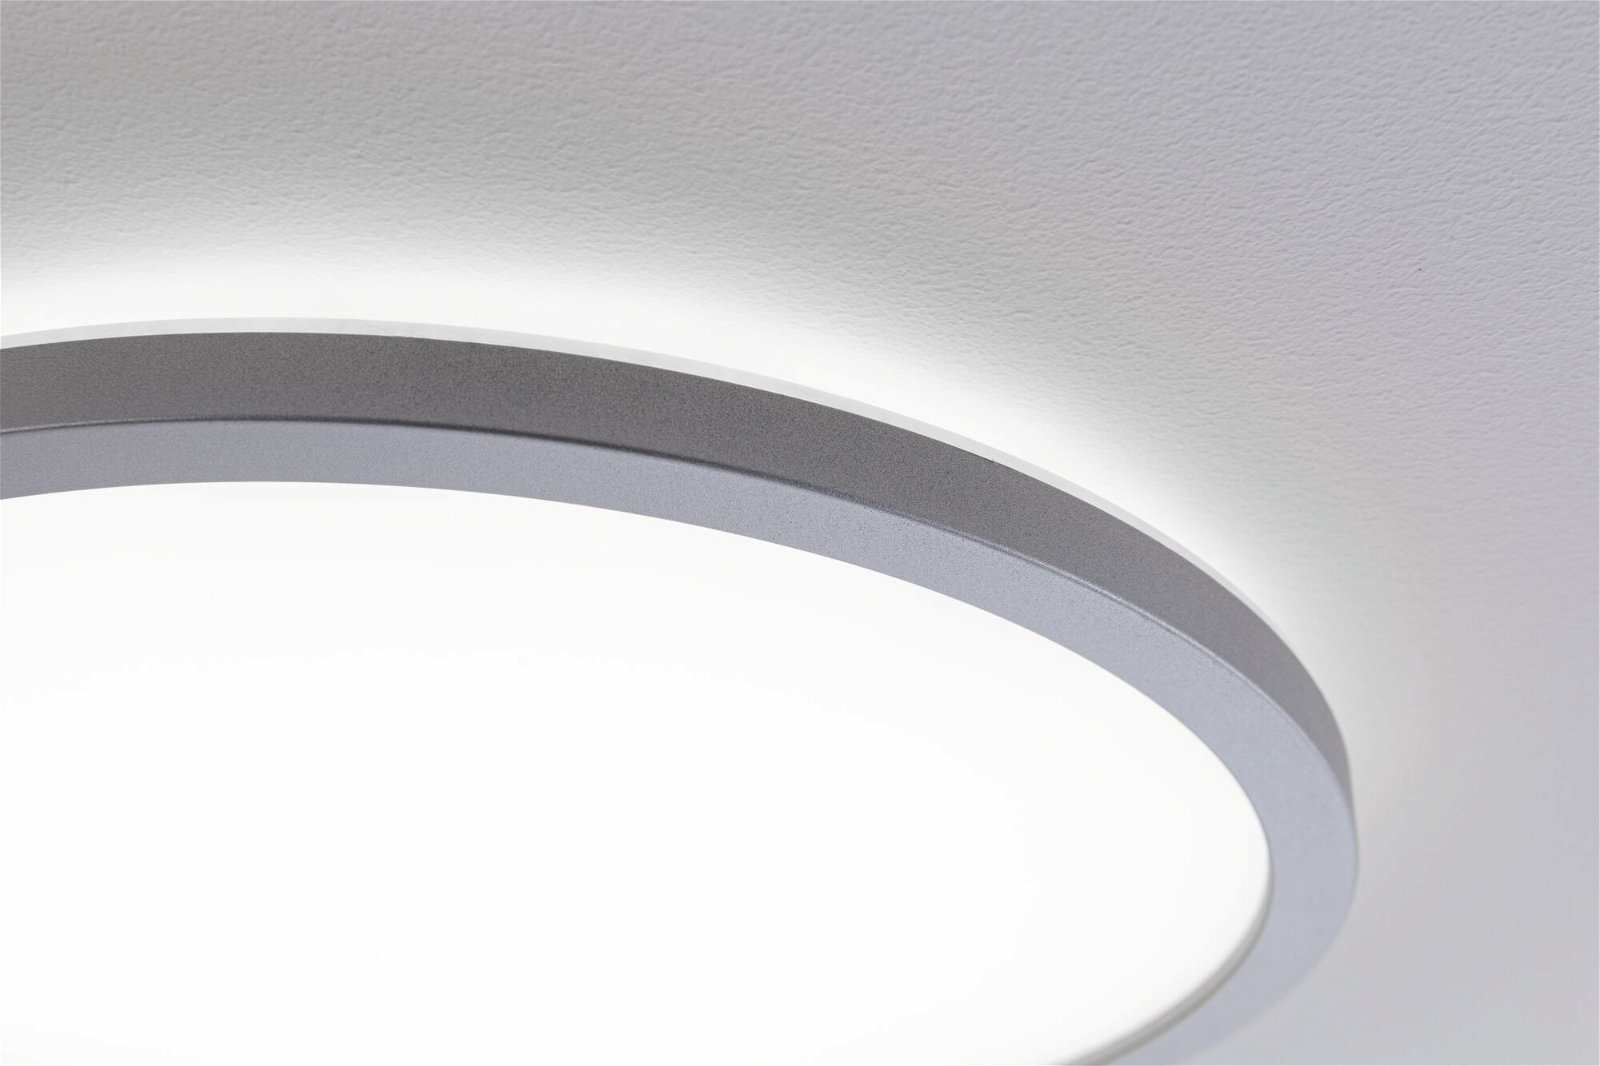 Panneau LED Atria Shine Backlight rond 190mm 11,2W 850lm 4000K Chrome mat